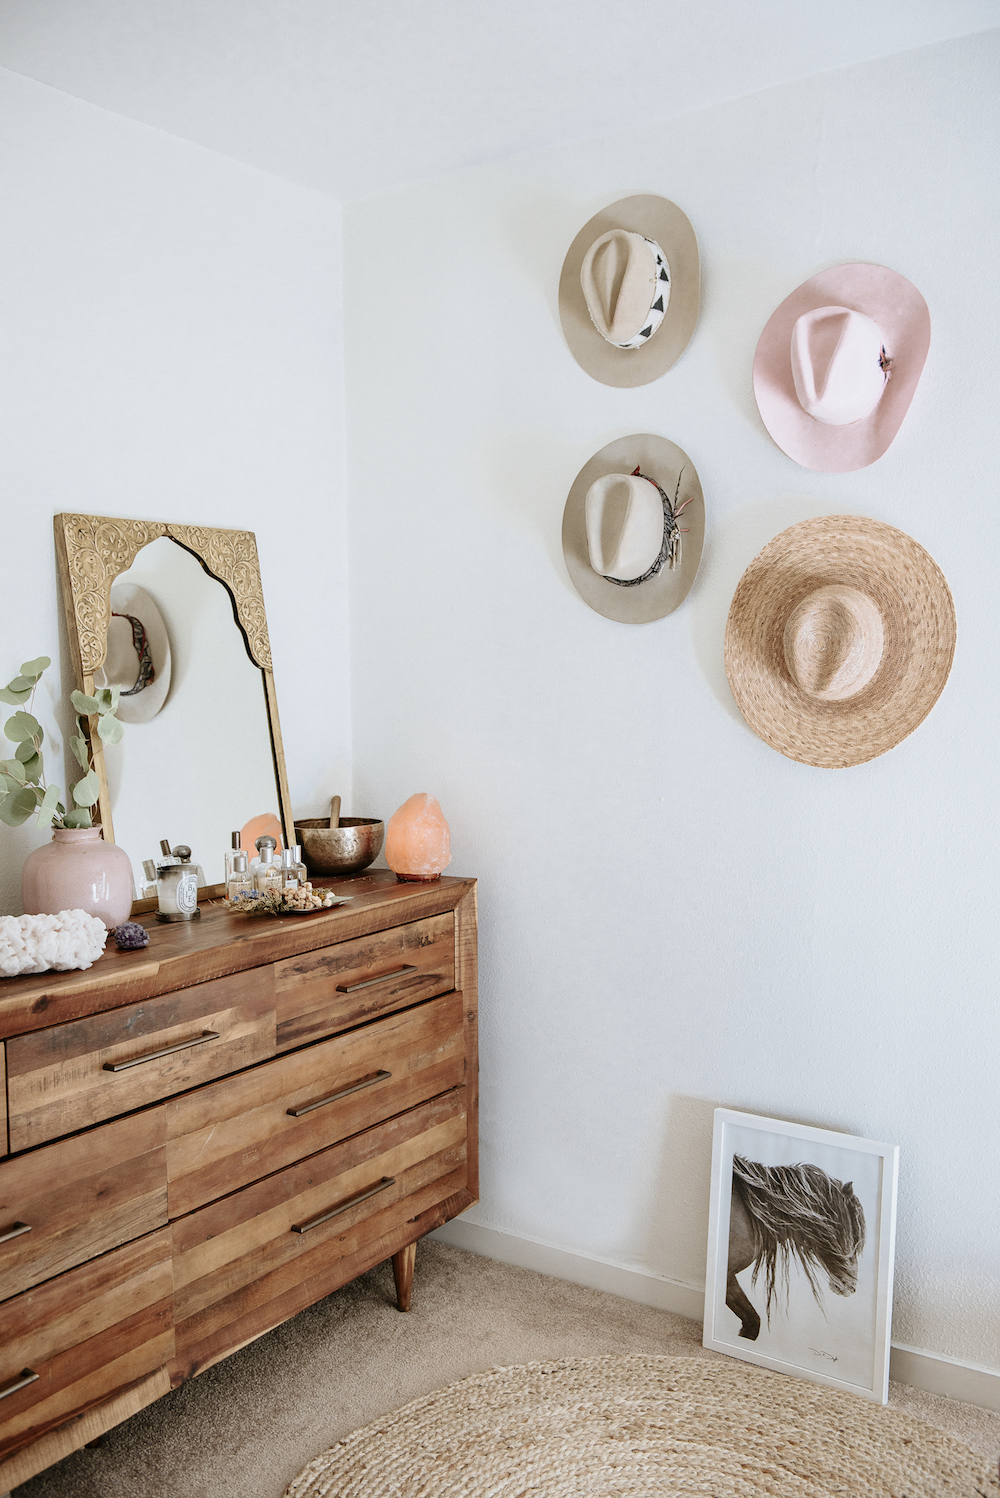 neutral decor, hats on wall decor